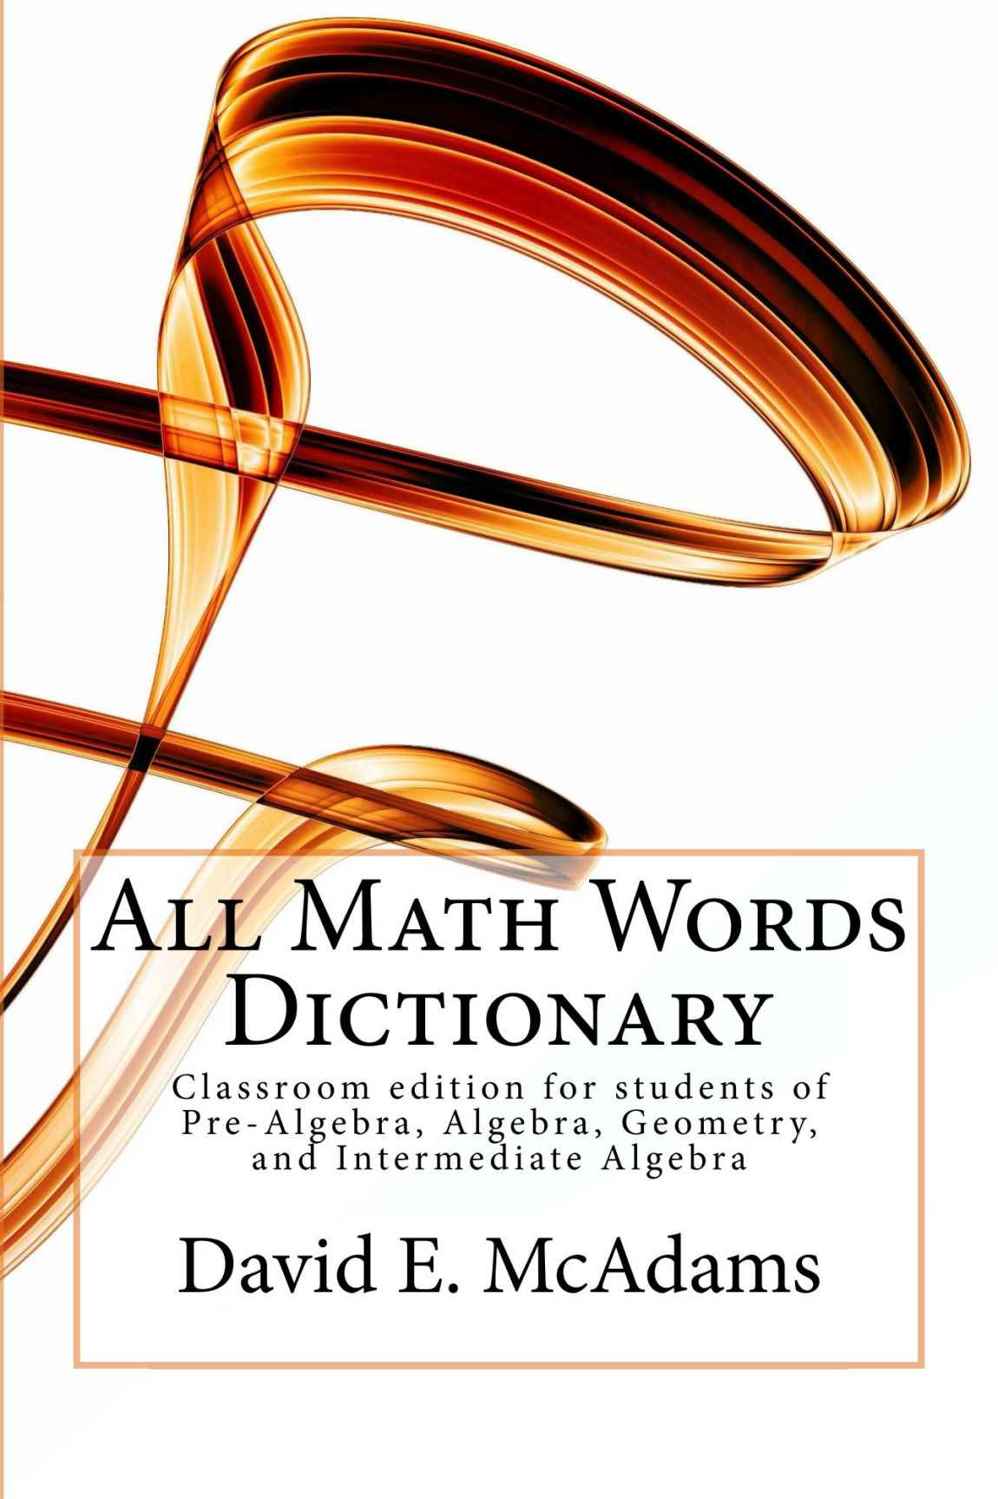 All Math Words Dictionary - Classroom Edition